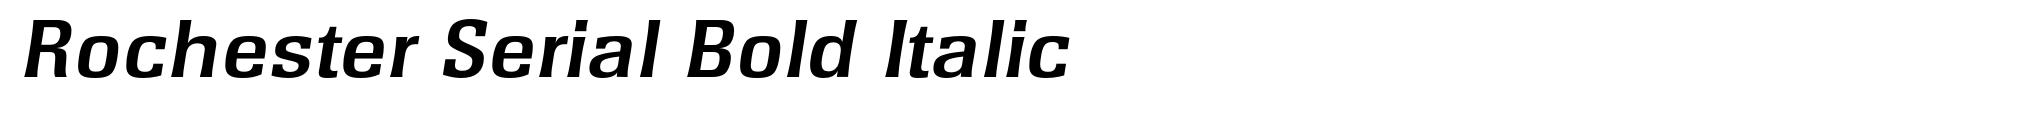 Rochester Serial Bold Italic image